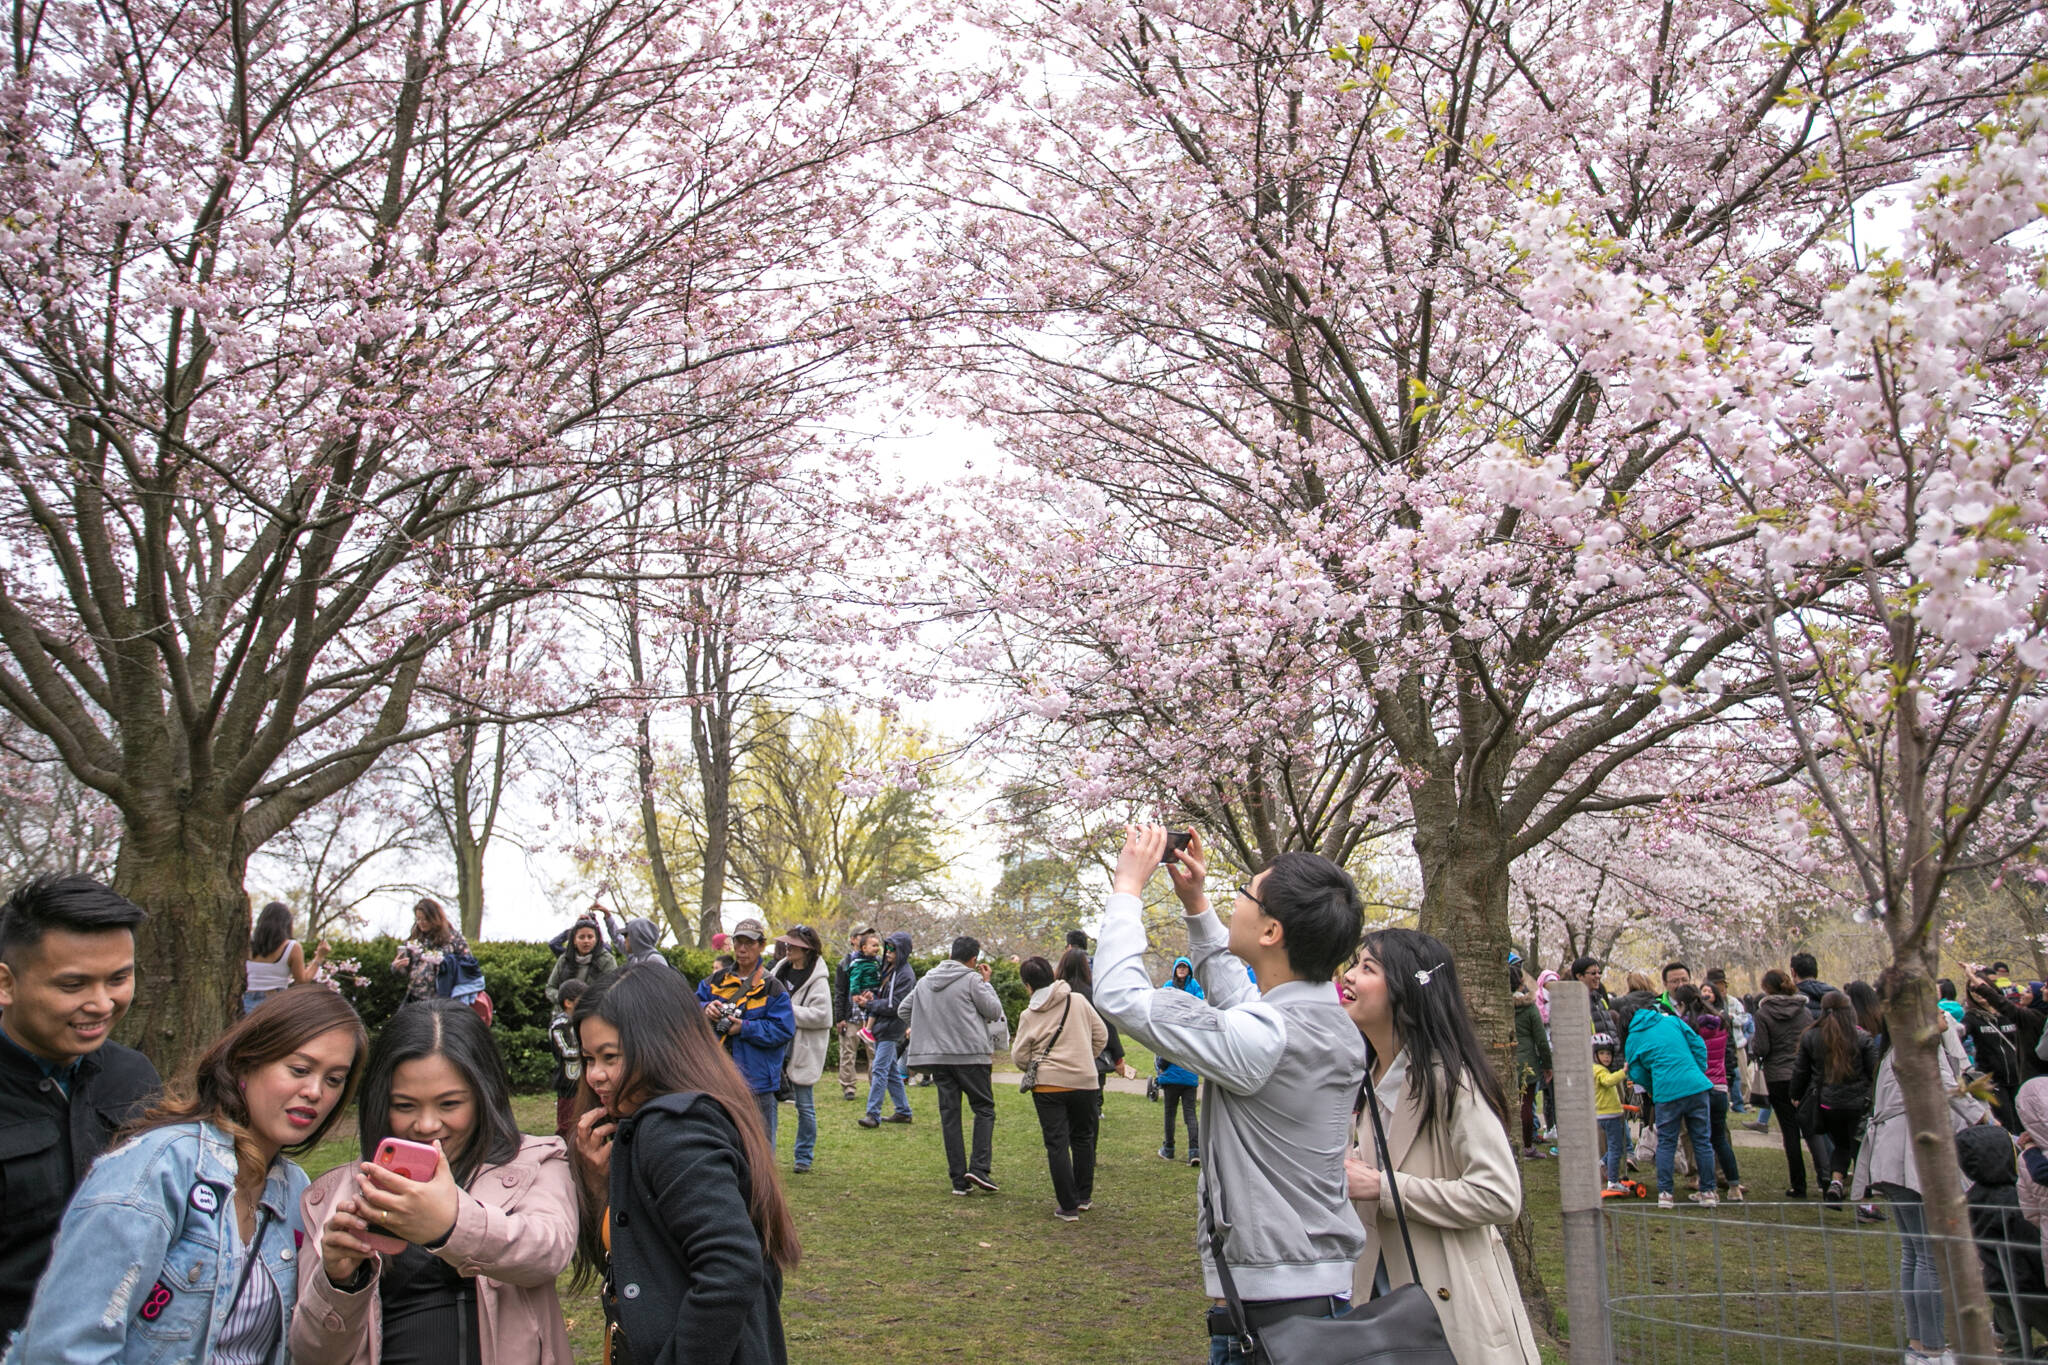 Massive crowds celebrate cherry blossoms season at High Park